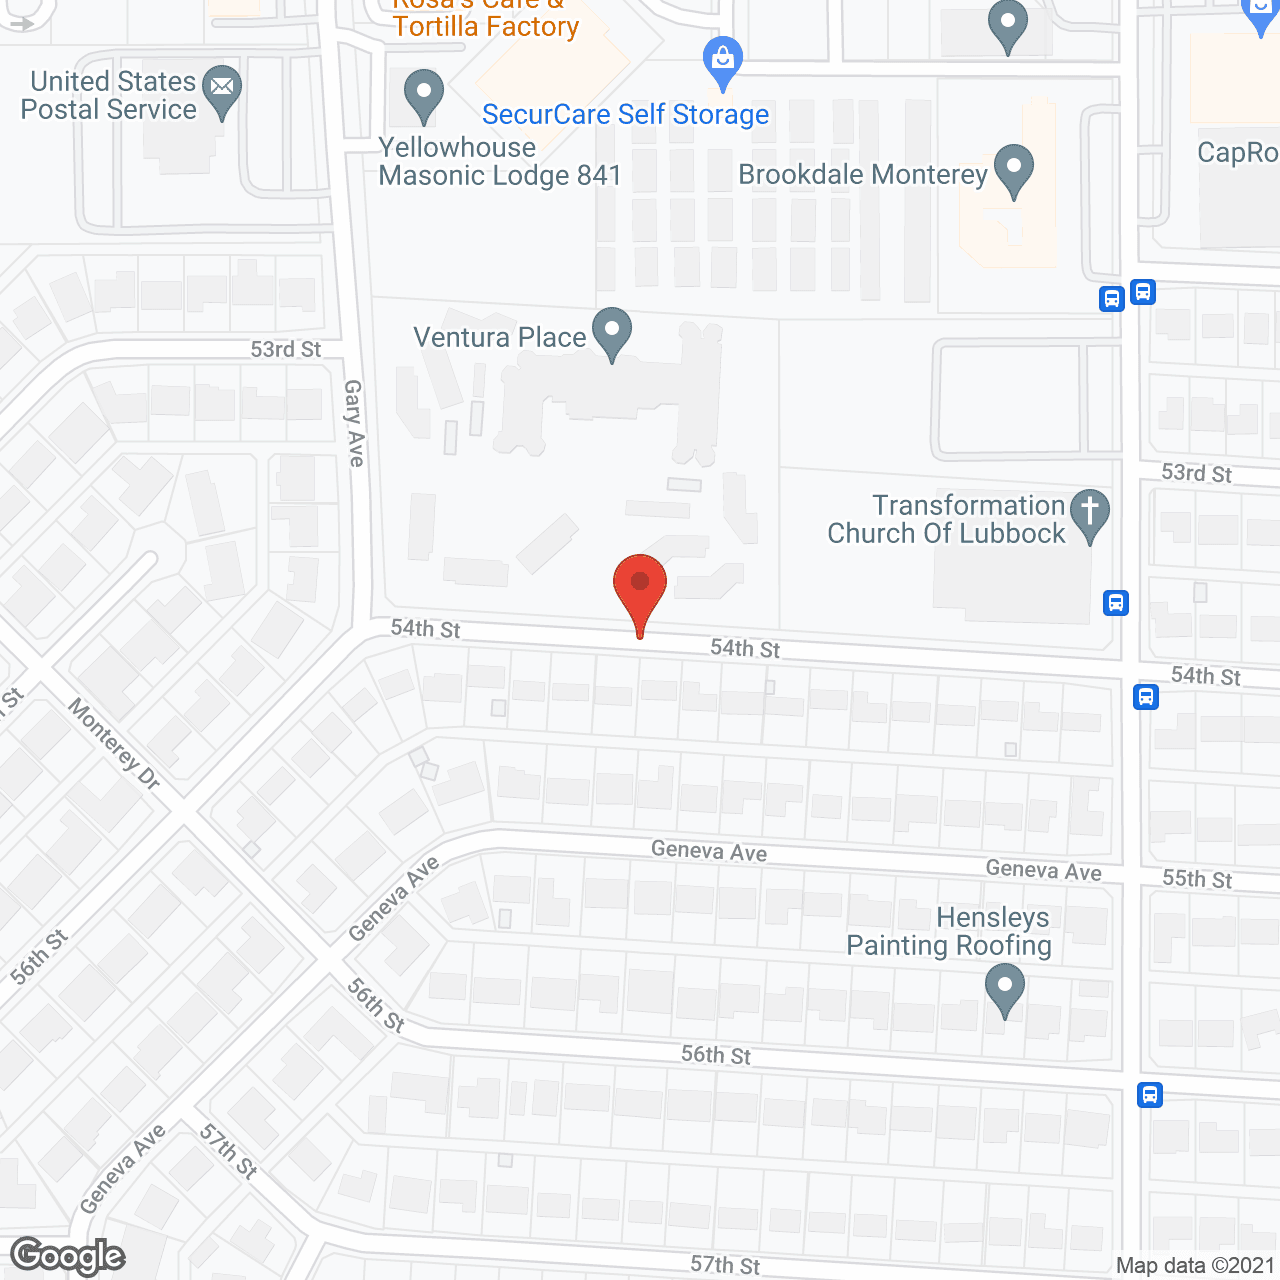 Ventura Place in google map